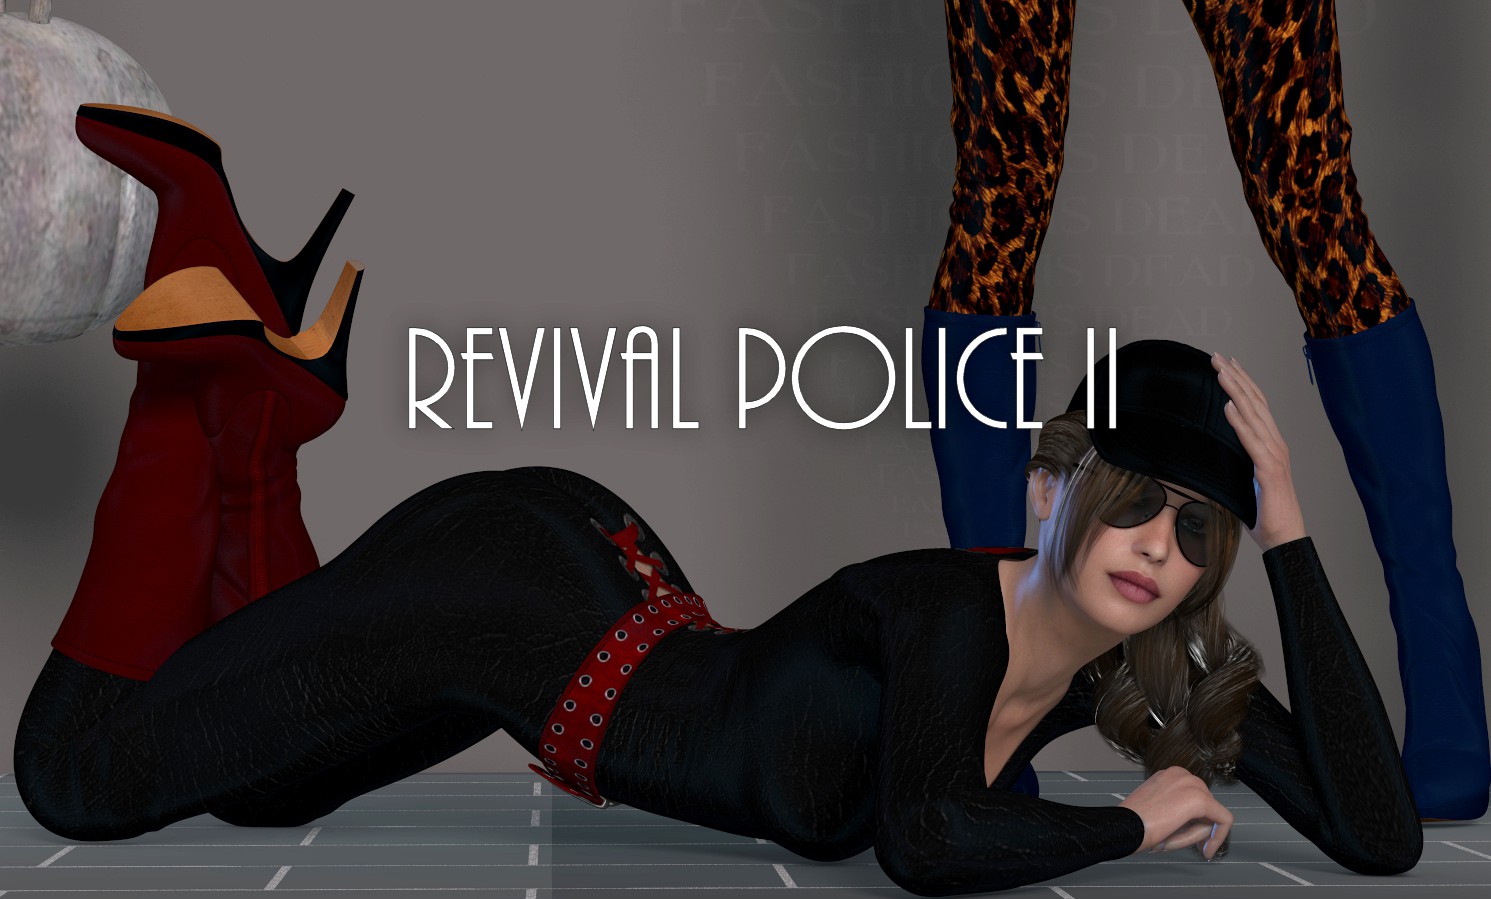 Revival for Police II